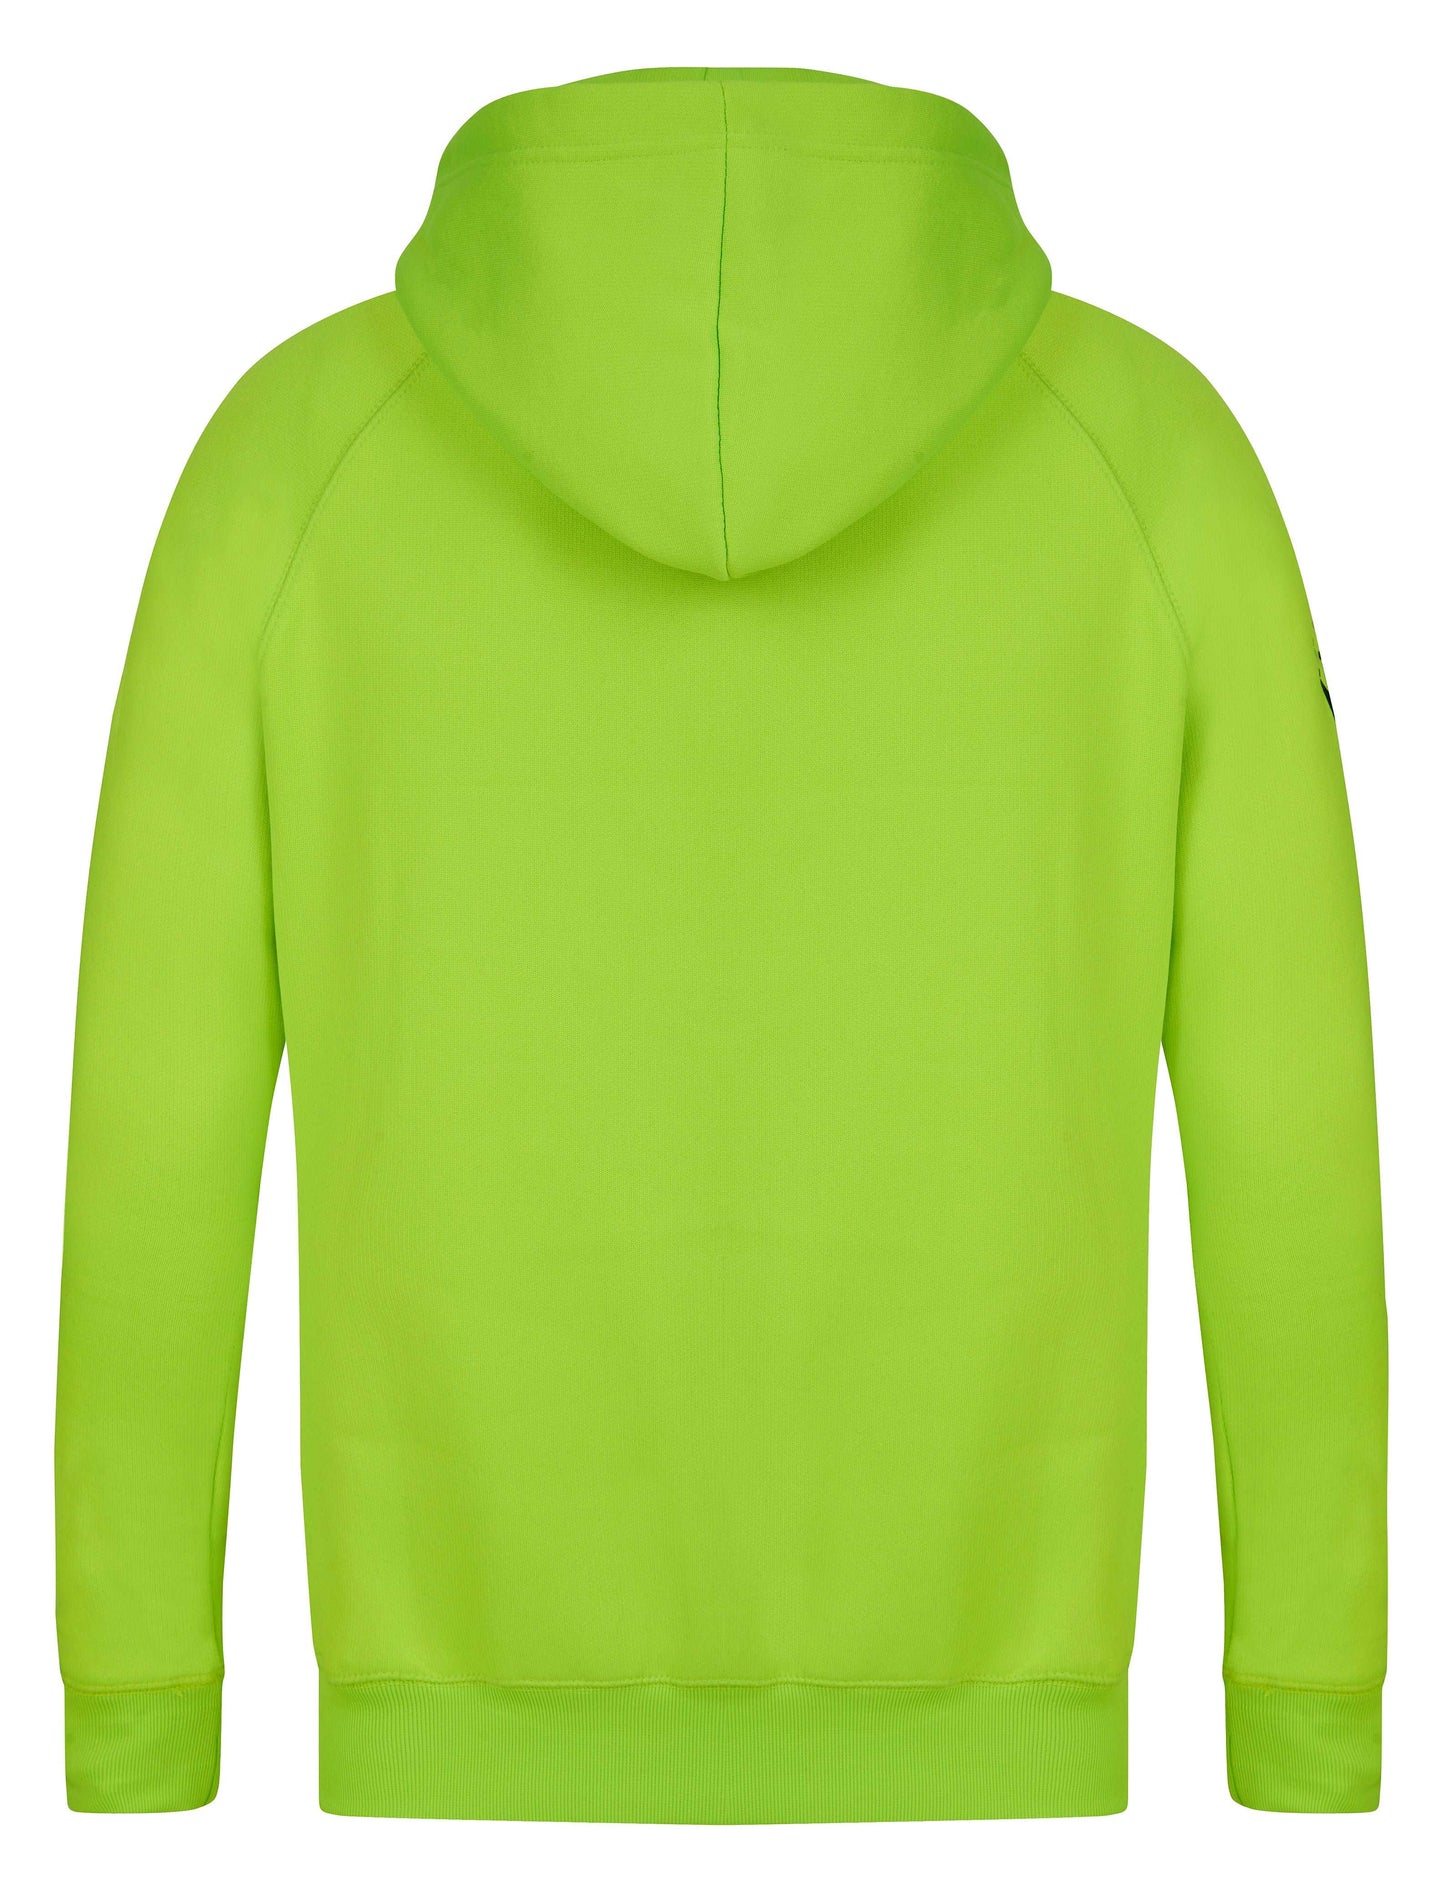 back of the hoodie Yungnrich illuminous Green Hoodie Jumper Black Logo